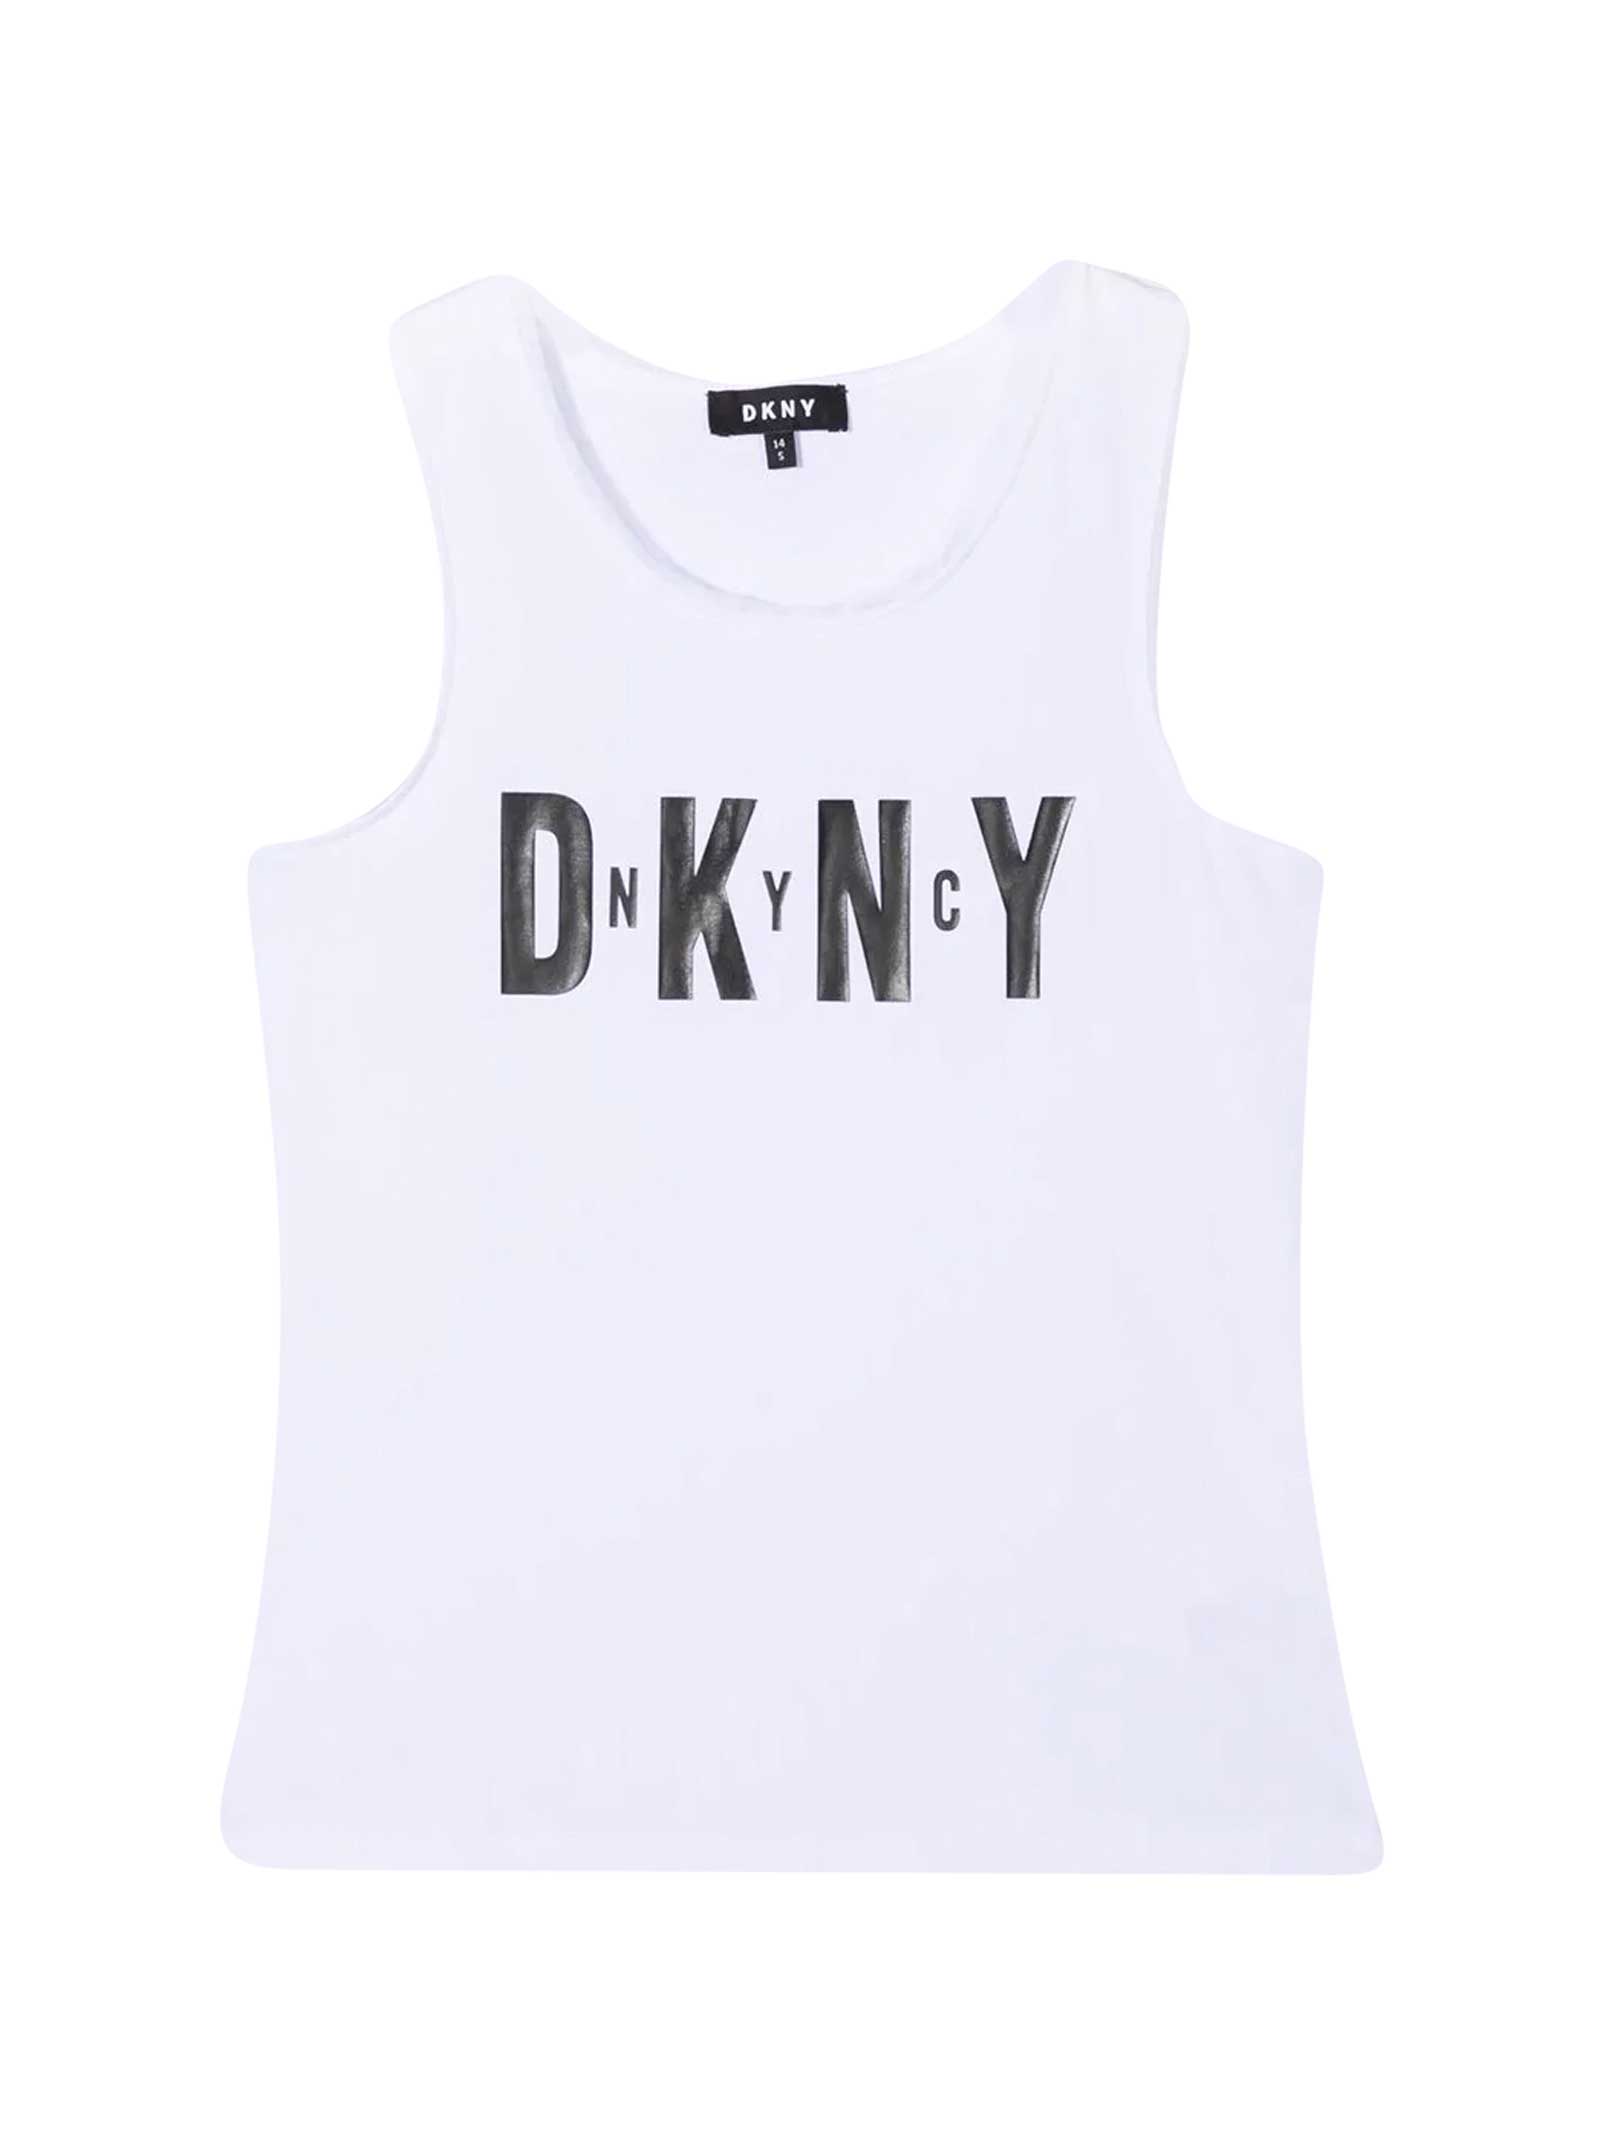 DKNY White Teen Tank Top